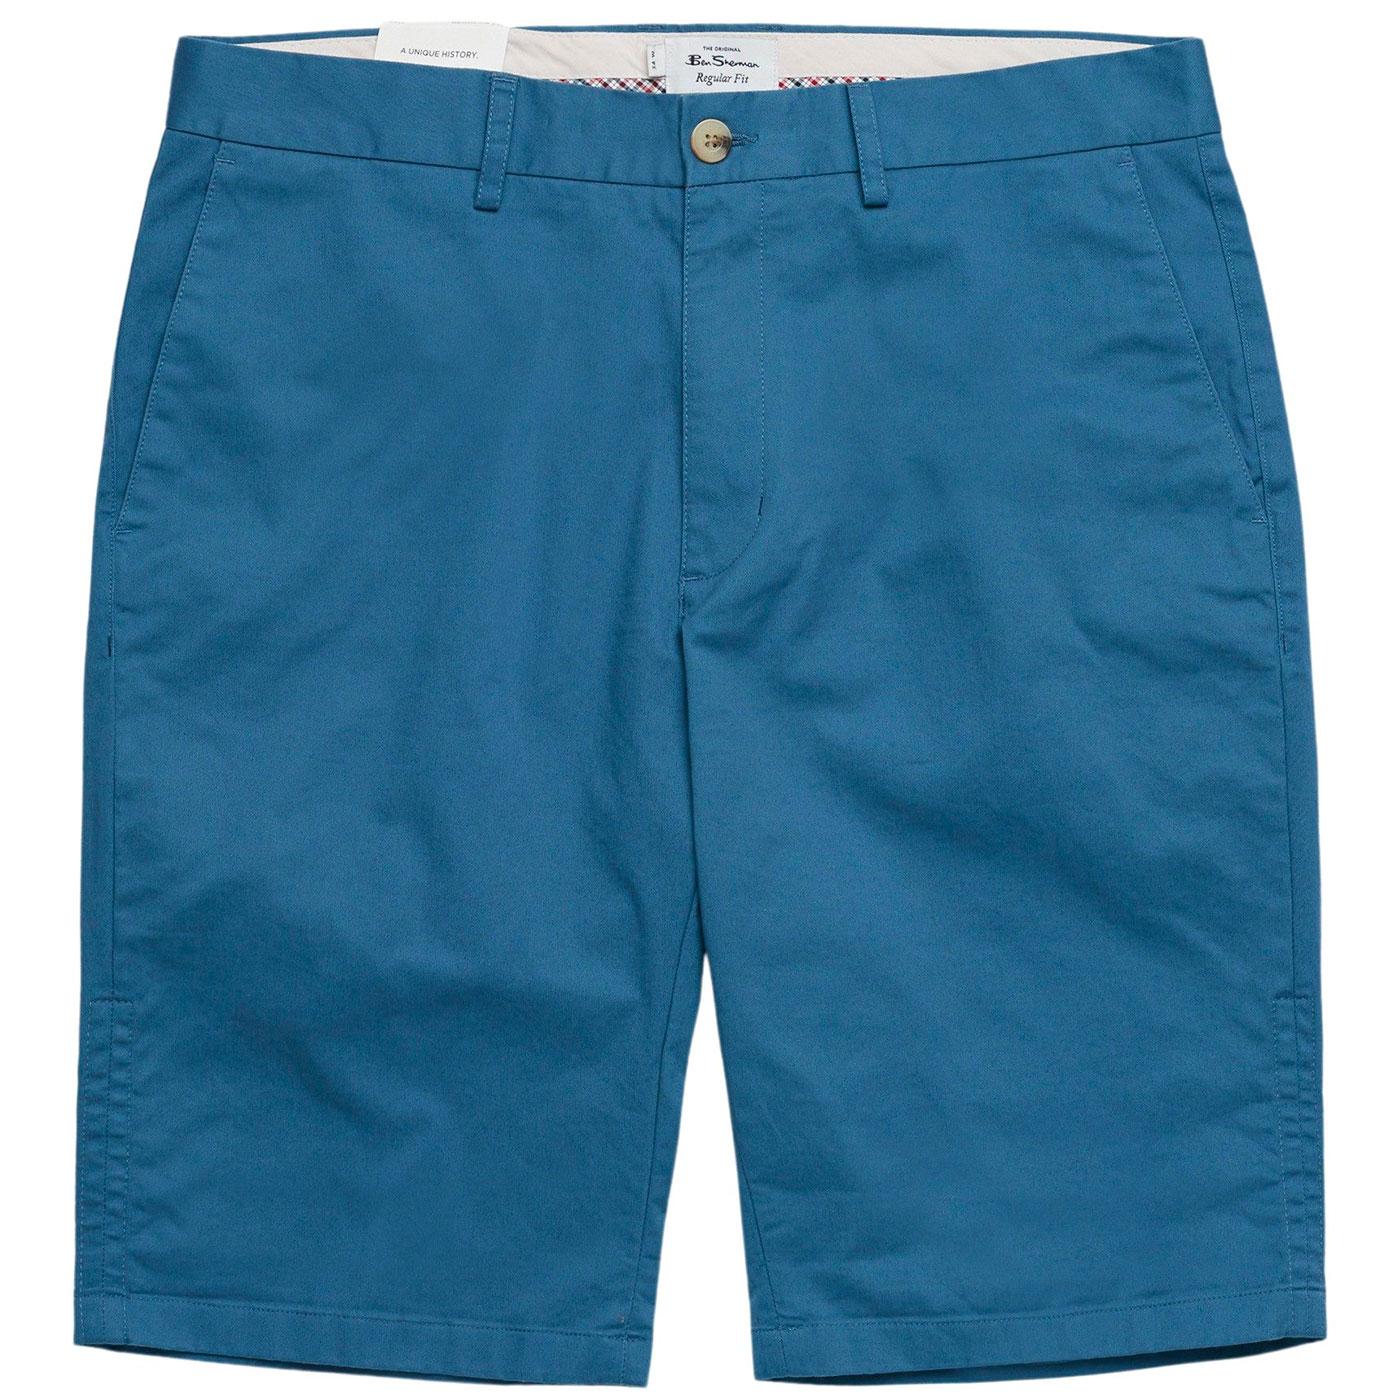 BEN SHERMAN Men's Retro Mod Chino Shorts in Wedgewood Blue